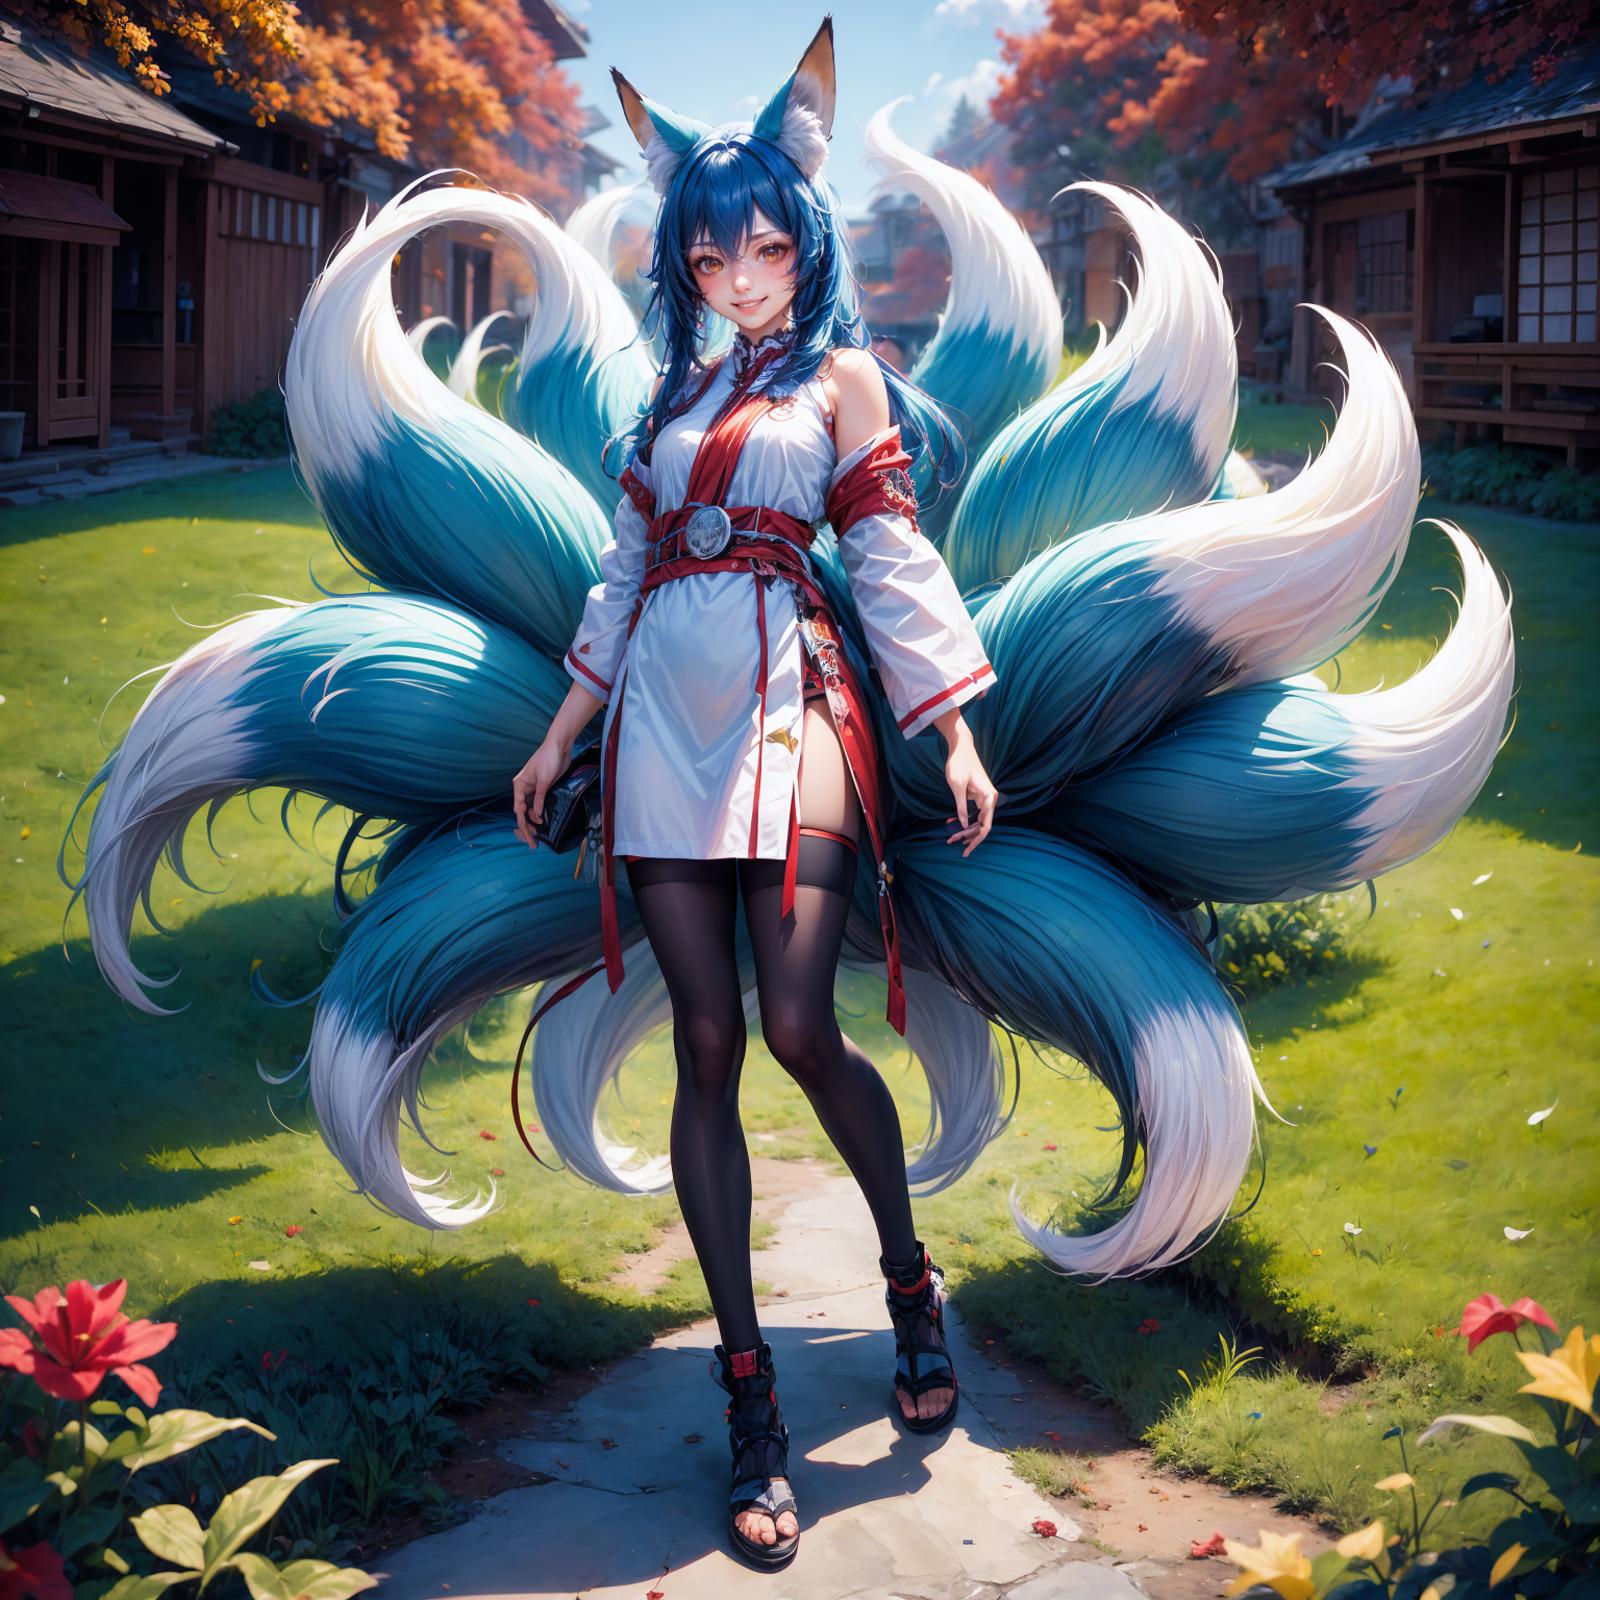 九尾狐女孩 Nine tailed Fox Girl image by wrs11